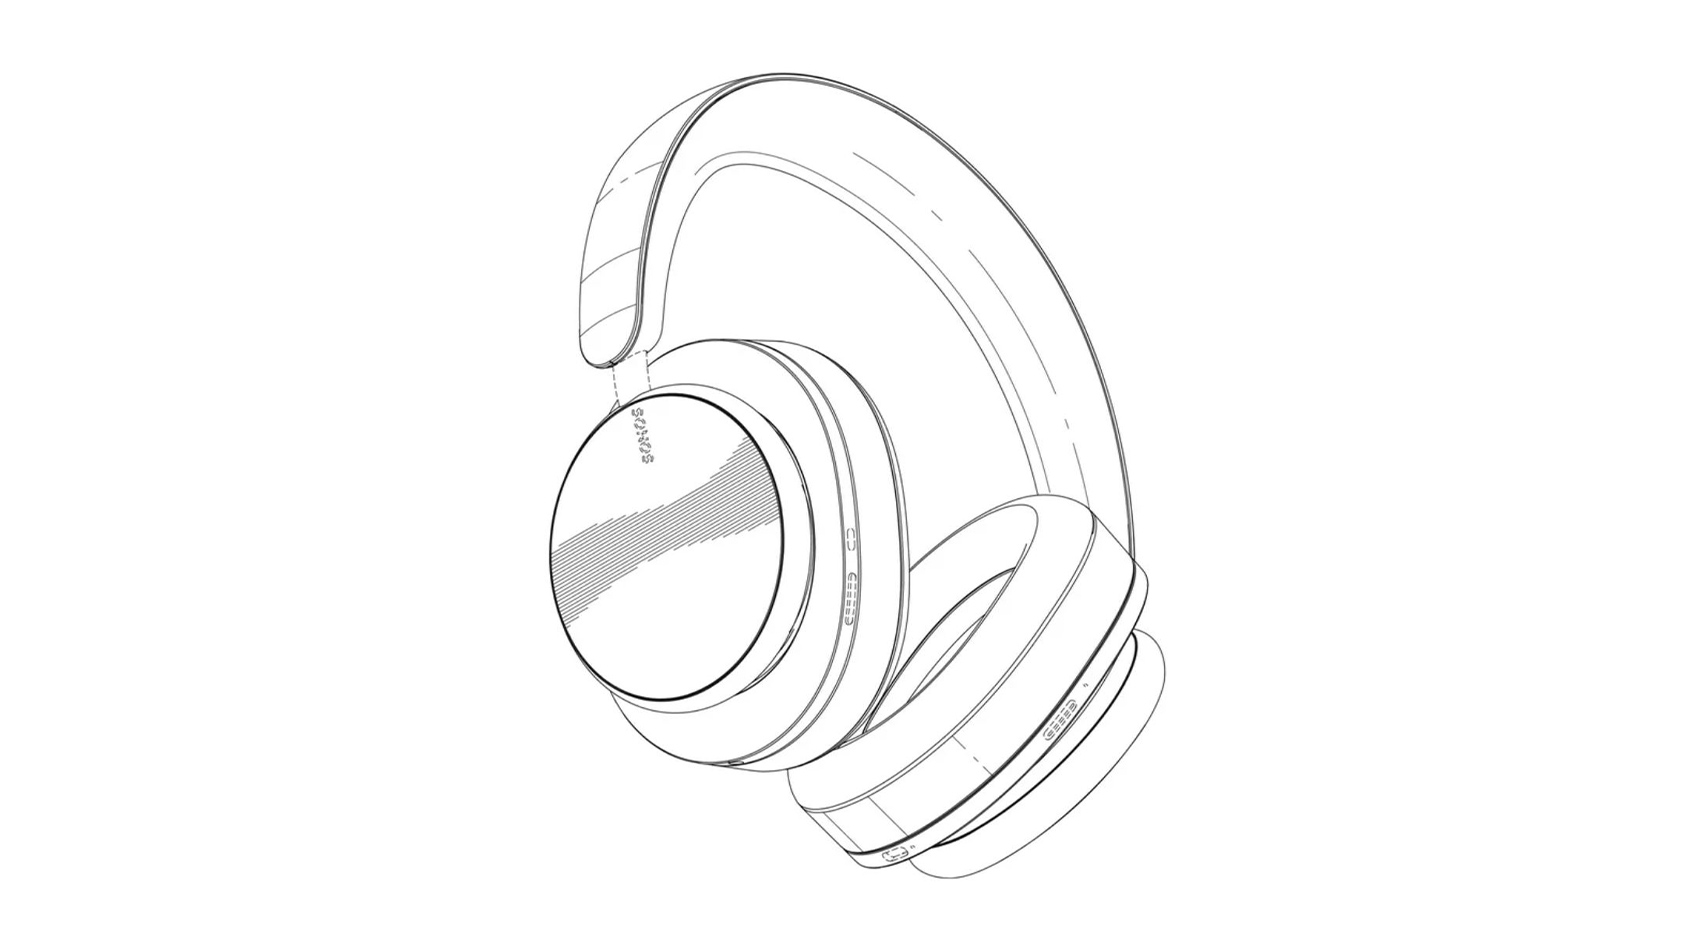 Sonos wireless headphones patent office render 1